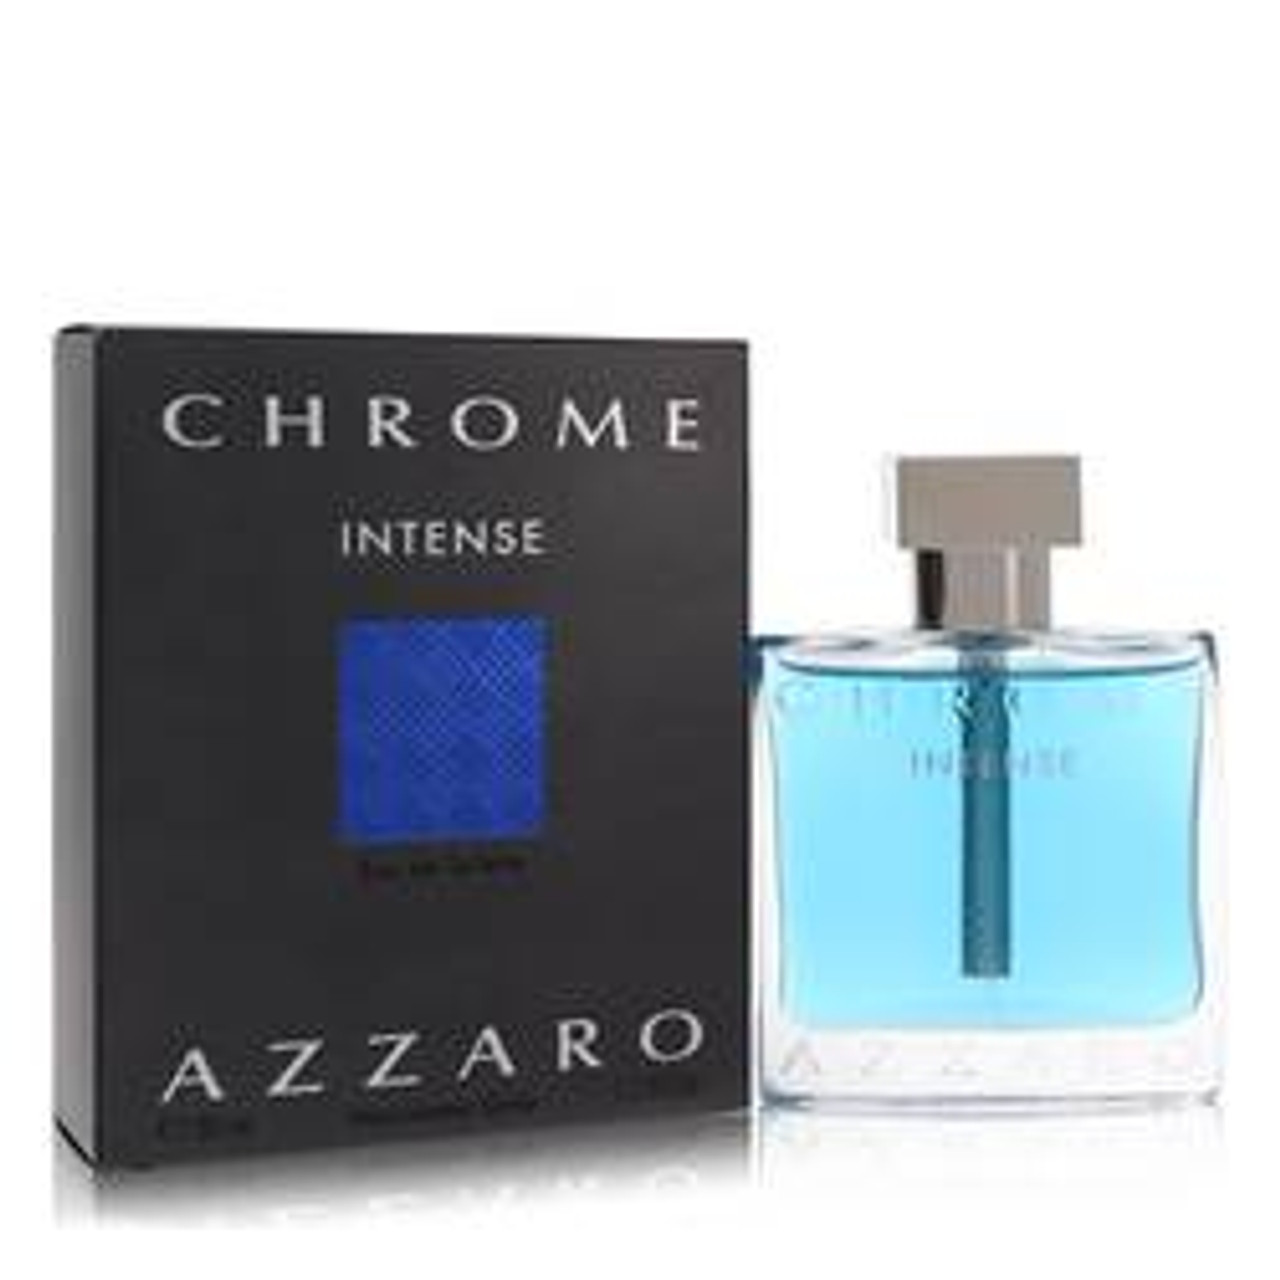 Chrome Intense Cologne By Azzaro Eau De Toilette Spray 1.7 oz for Men - [From 67.00 - Choose pk Qty ] - *Ships from Miami